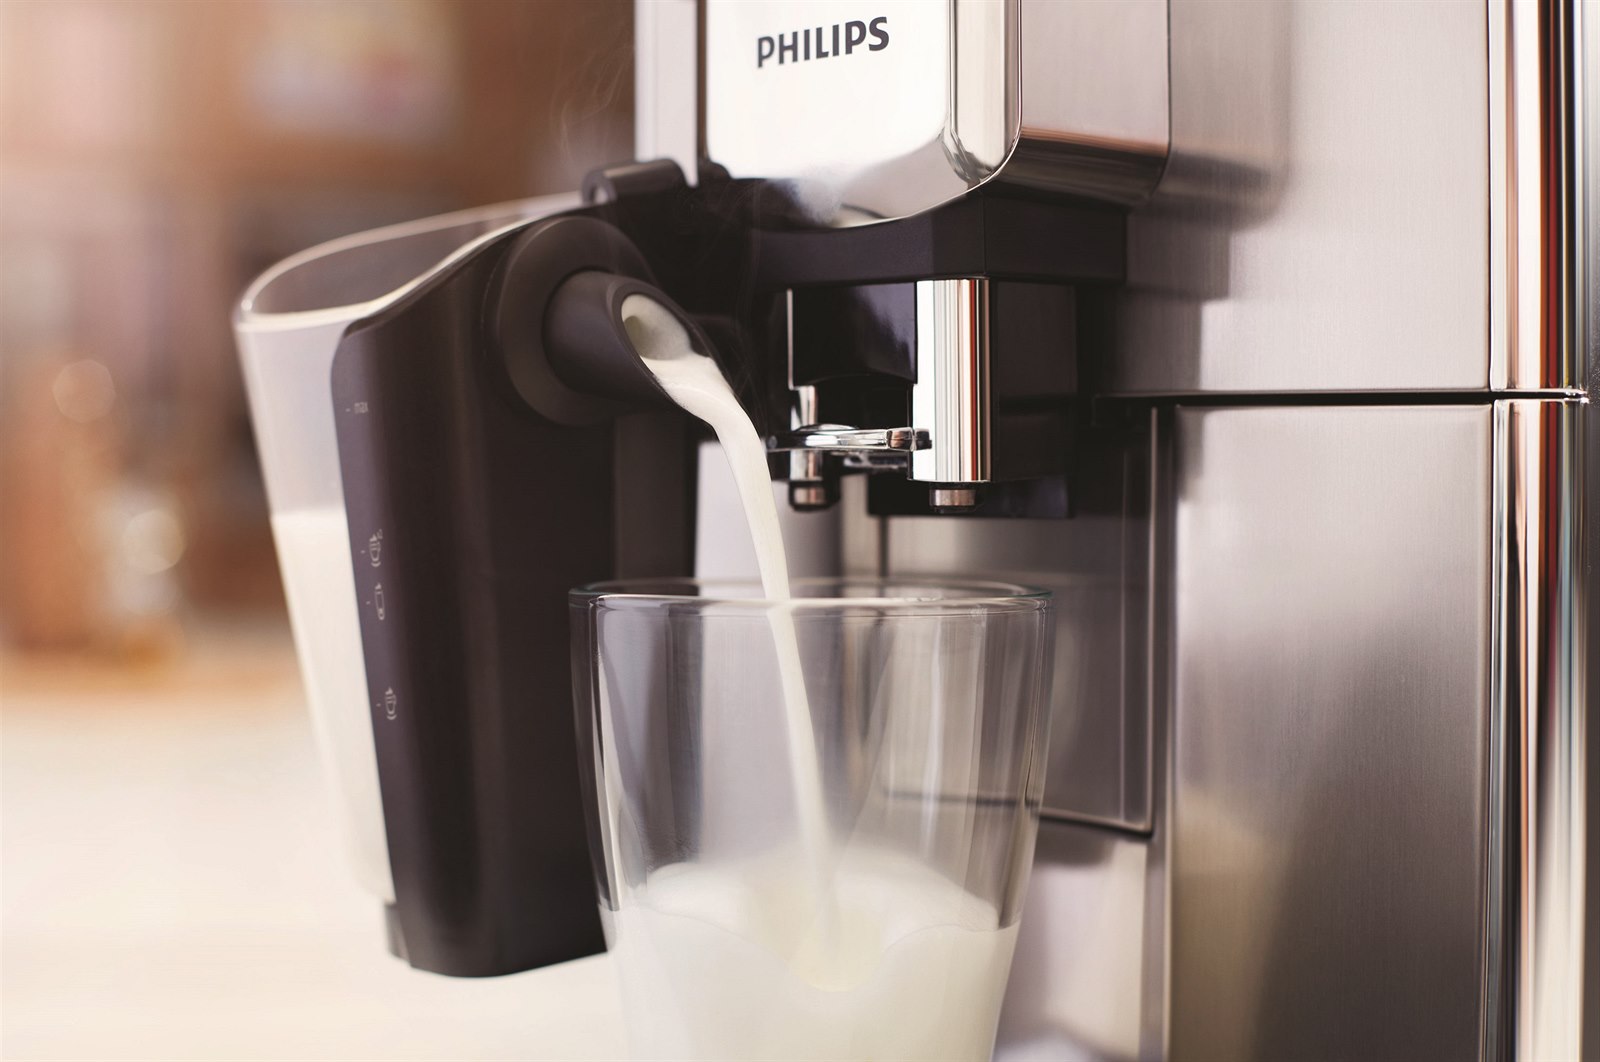 Phillips lattego